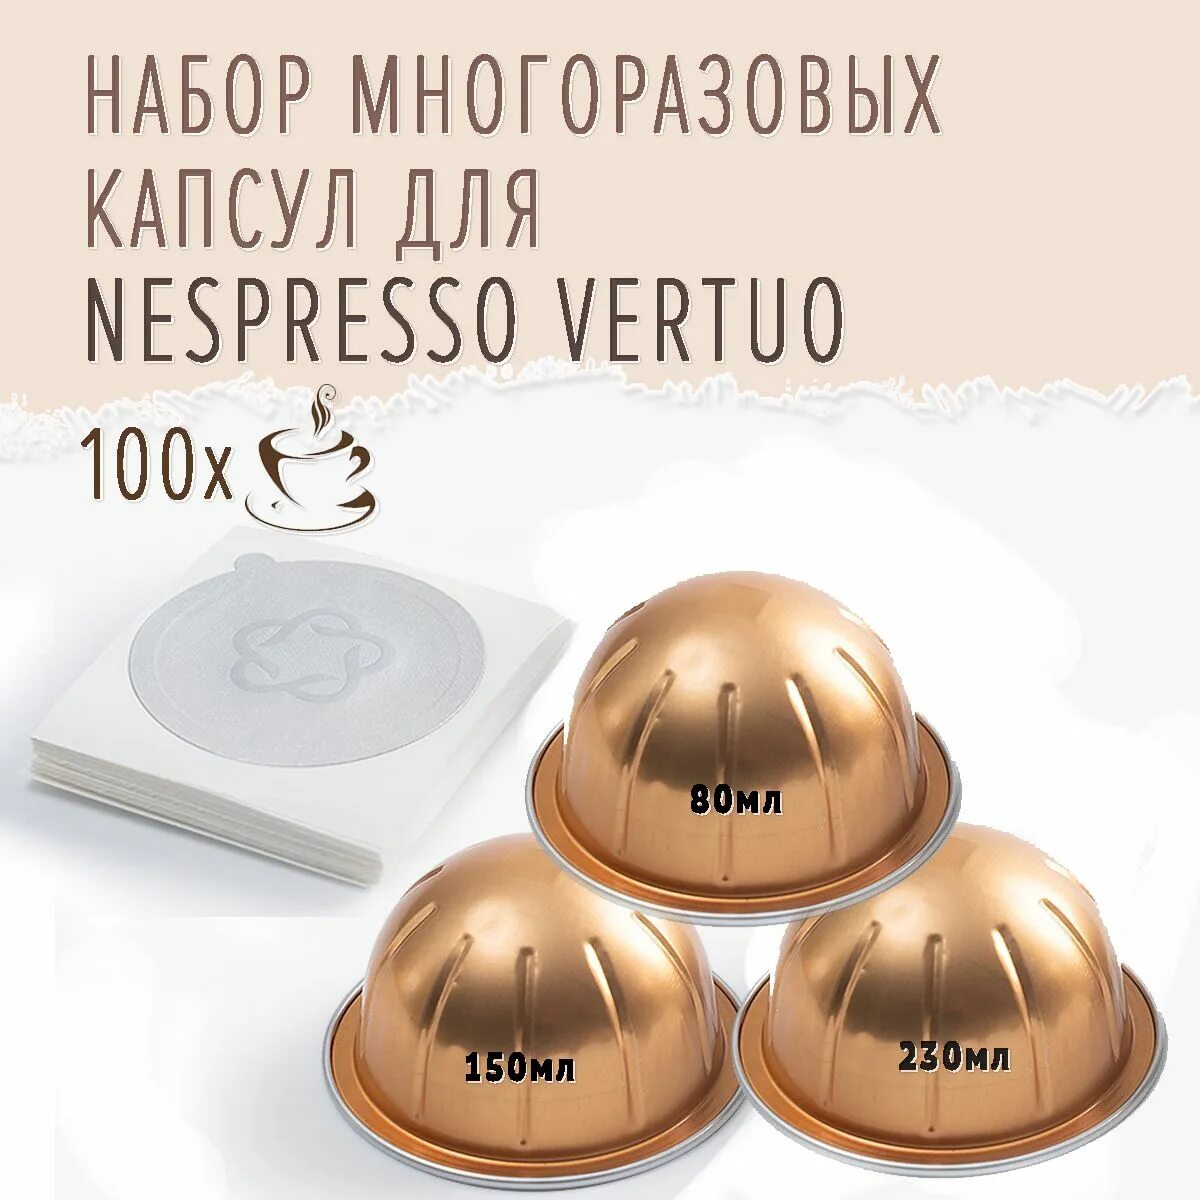 Капсулы вертуо купить. Nespresso Vertuo капсулы. Многоразовые капсулы неспрессо Vertuo. Многоразовая капсула для Nespresso Vertuo. Размер капсул Nespresso Vertuo.